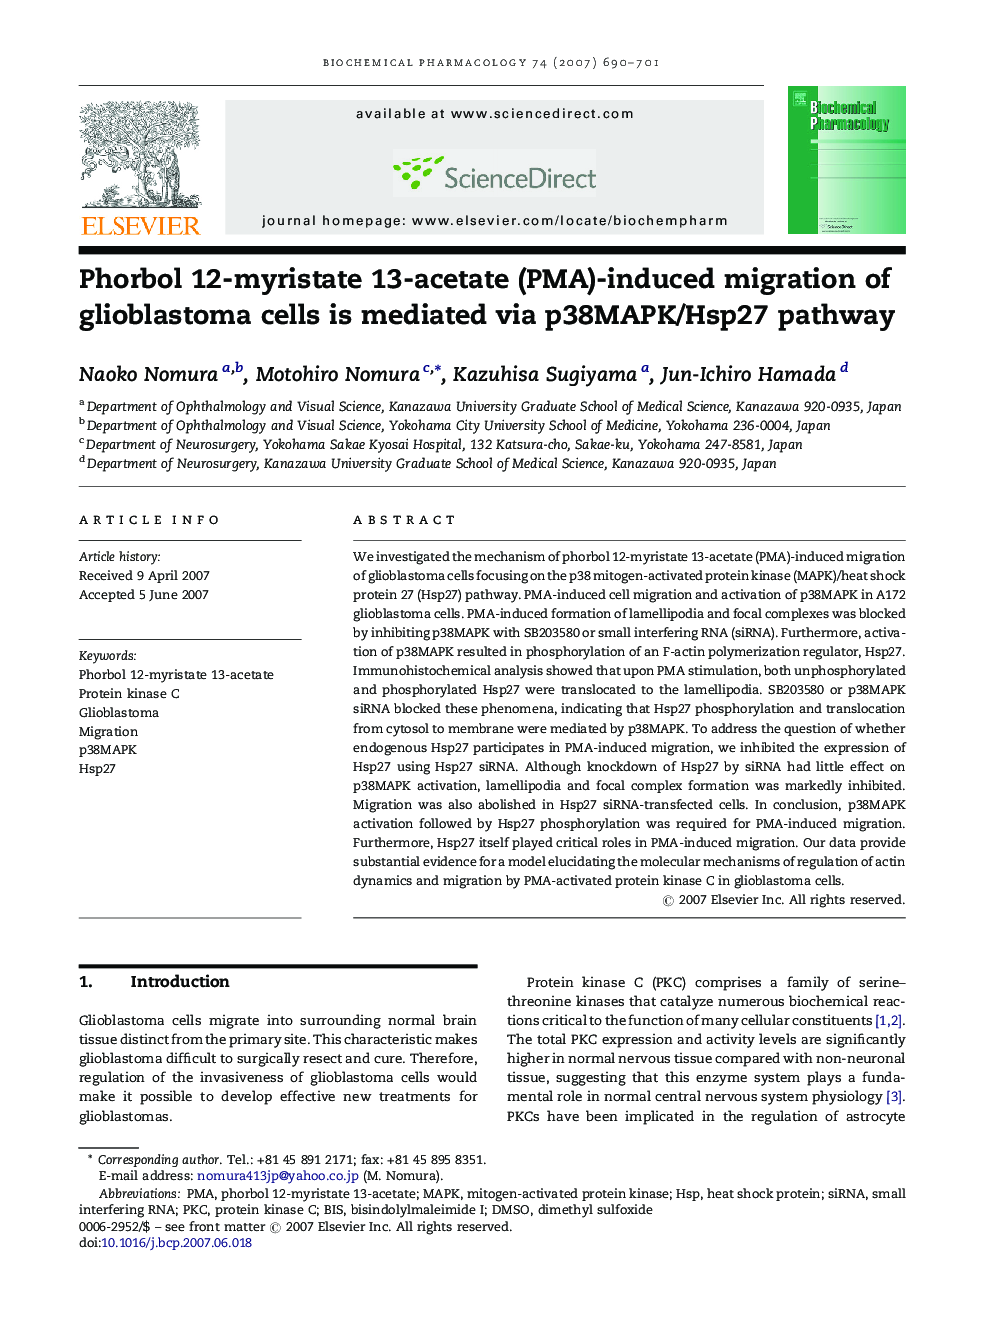 Phorbol 12-myristate 13-acetate (PMA)-induced migration of glioblastoma cells is mediated via p38MAPK/Hsp27 pathway